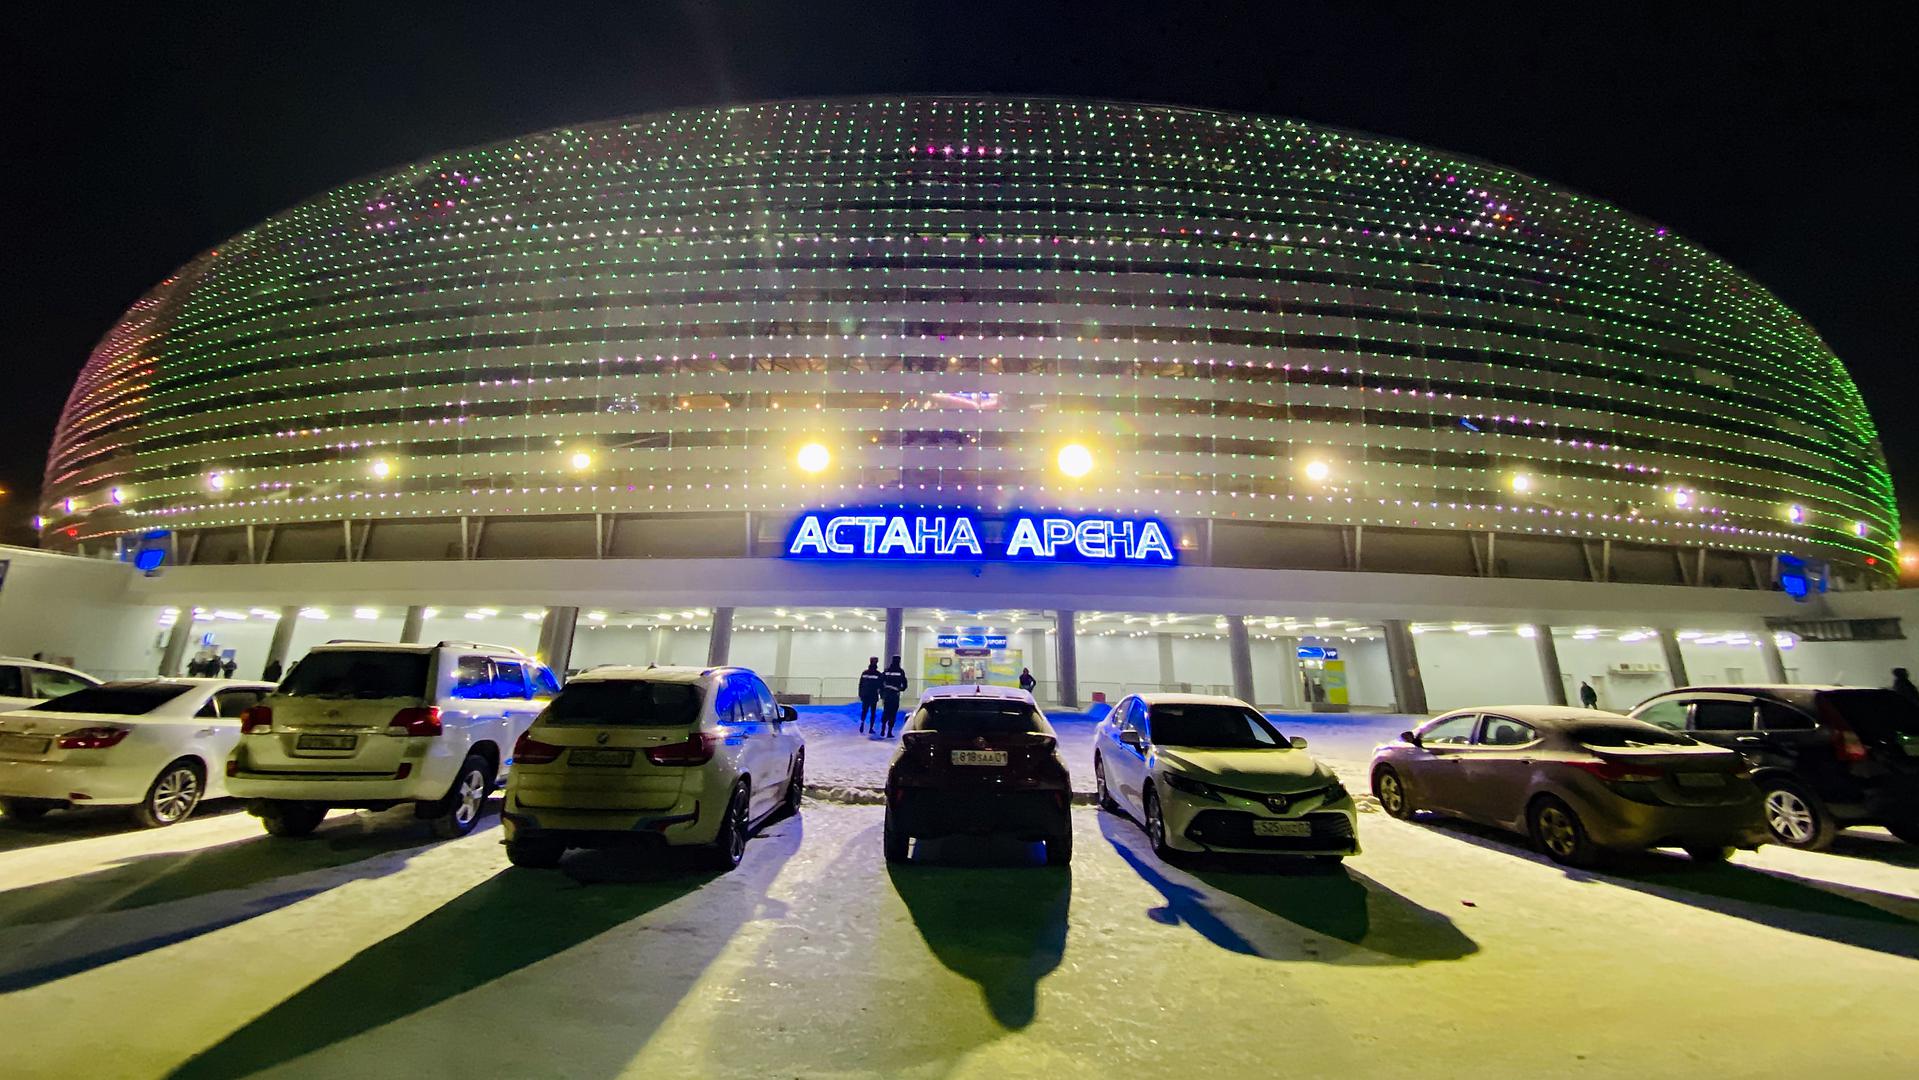 Gallery of Astana Arena ahead of Astana v Man Utd | Manchester United